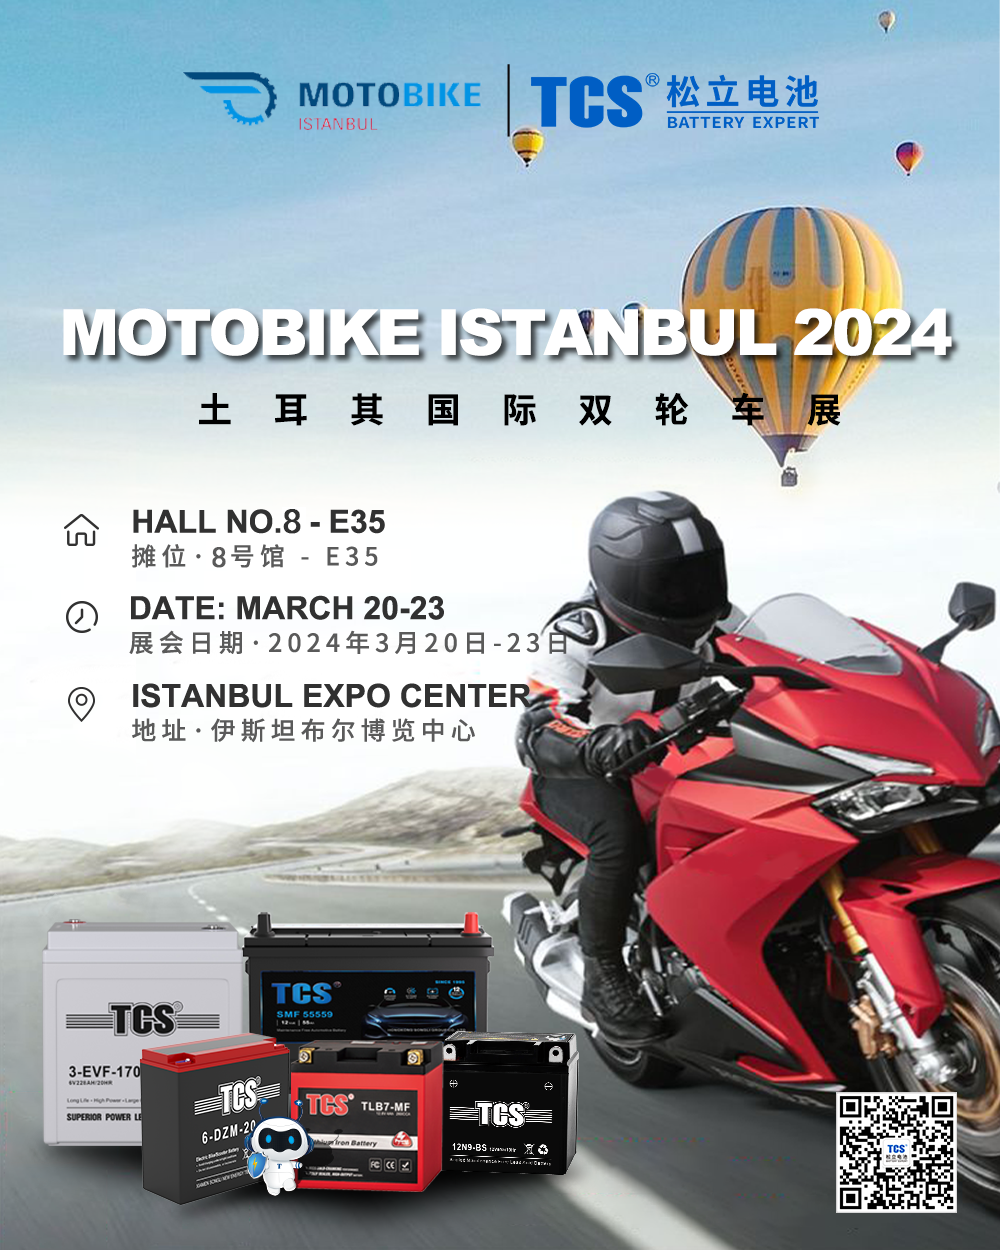 Мотоцикл Истанбул 2024